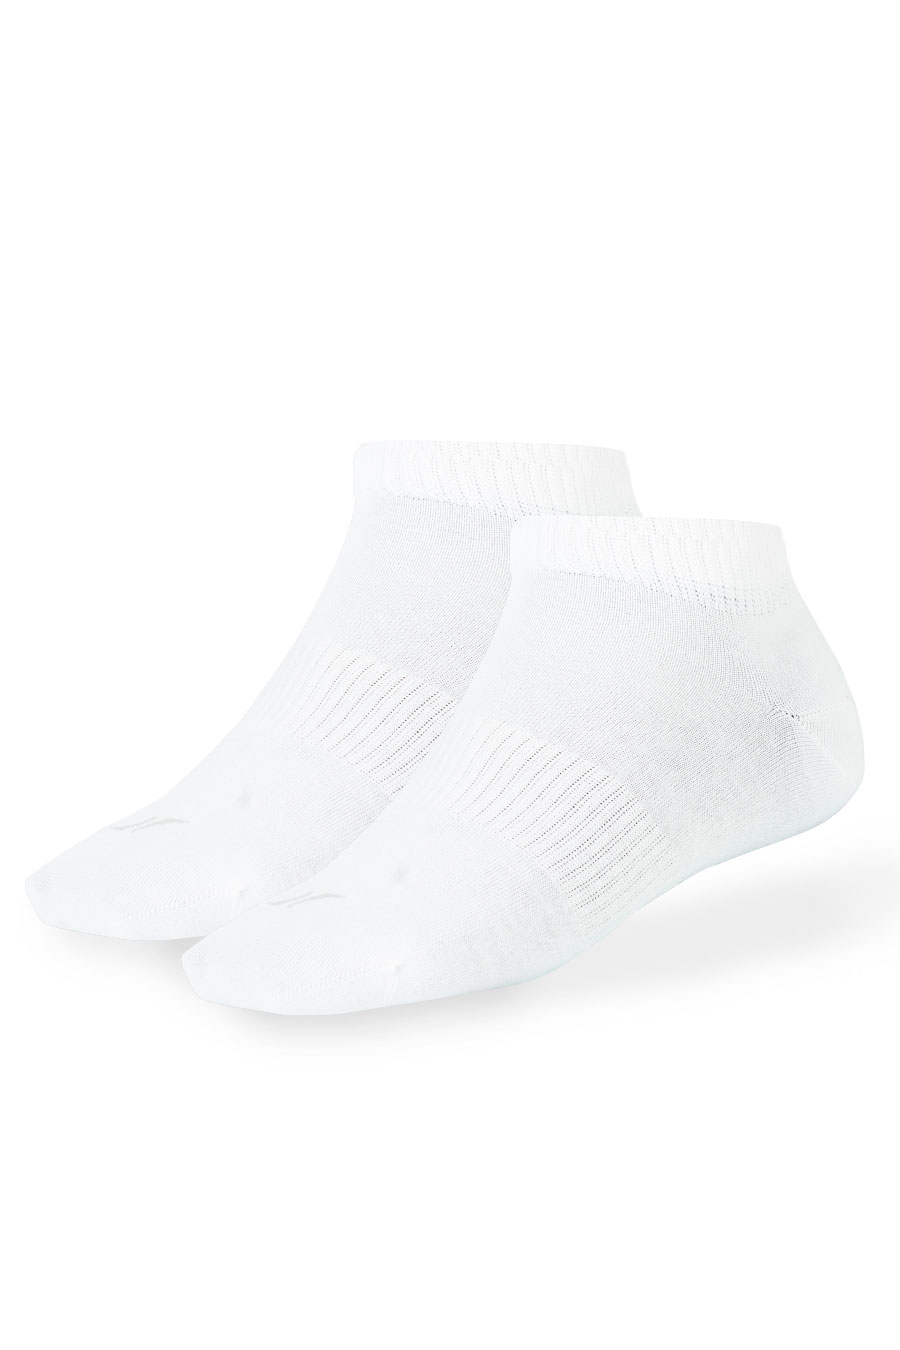 Socks X JEANS 16S12-1-WHITE